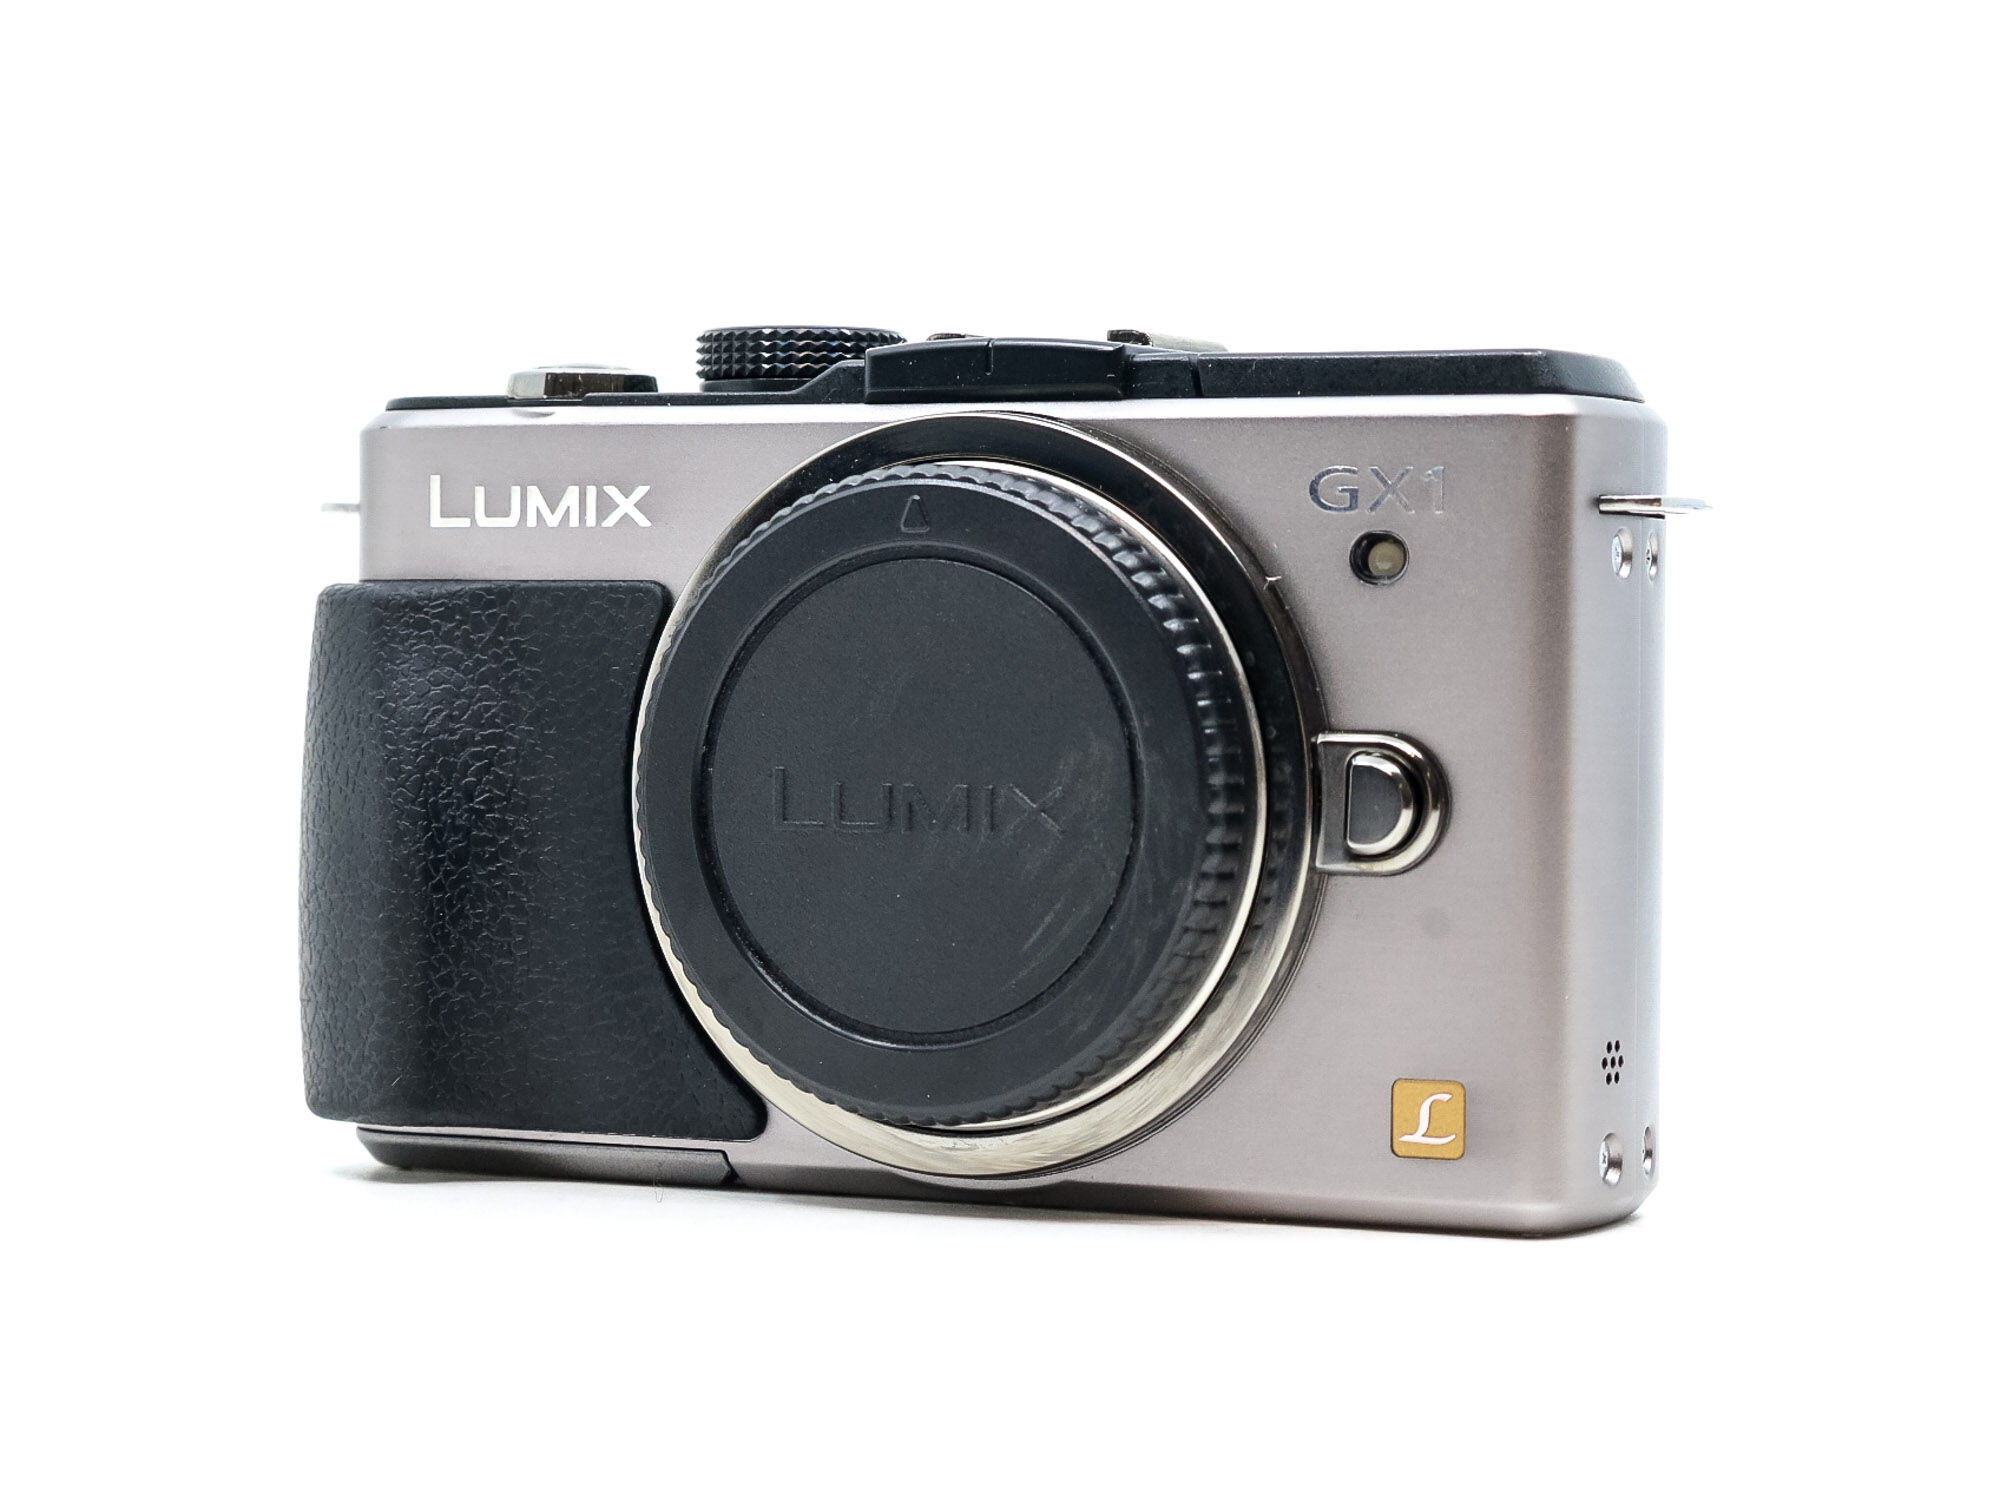 Panasonic Lumix DMC-GX1 (Condition: Excellent)